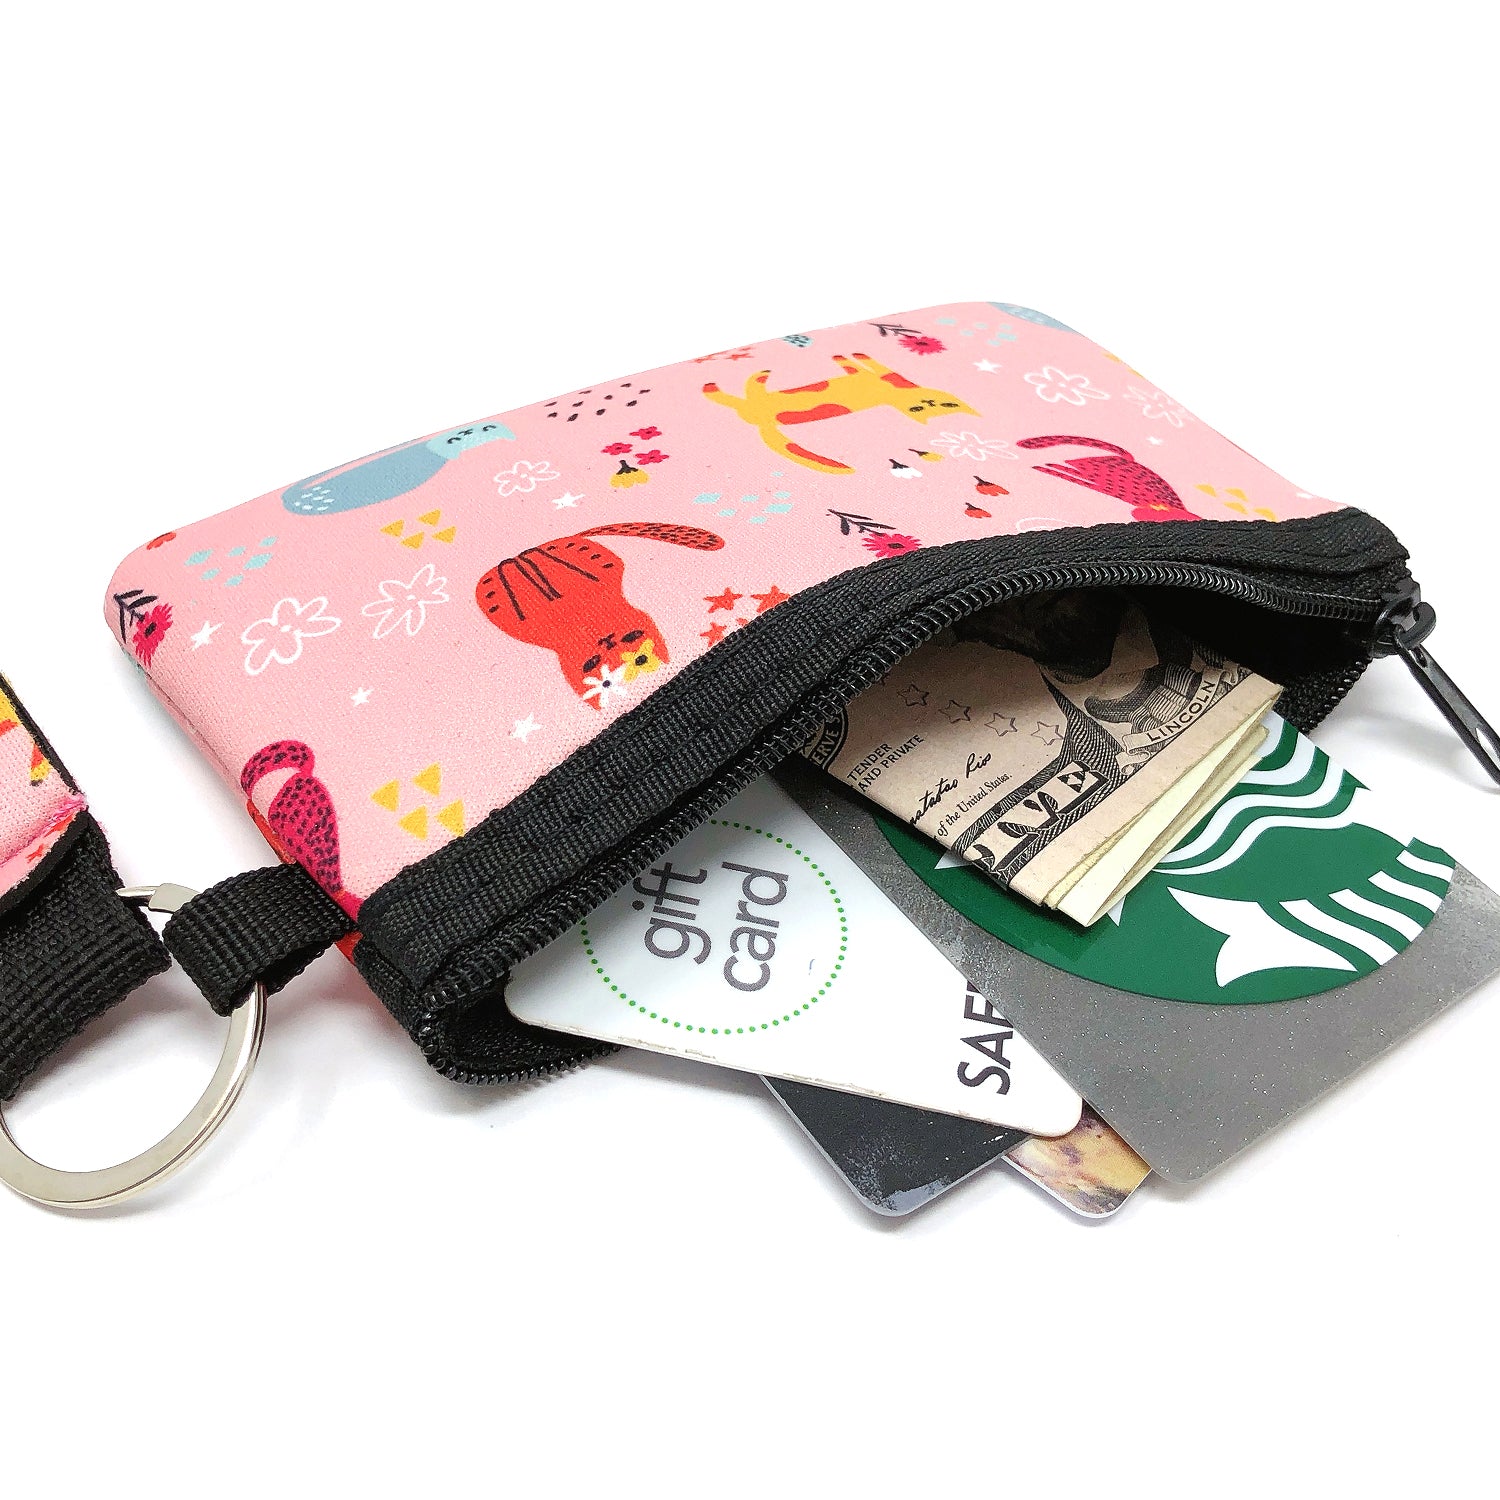 Hand-held Mini Wallet Clutch Bag Coin Purse Key Ring Pendant Bag Simple  Card Bag